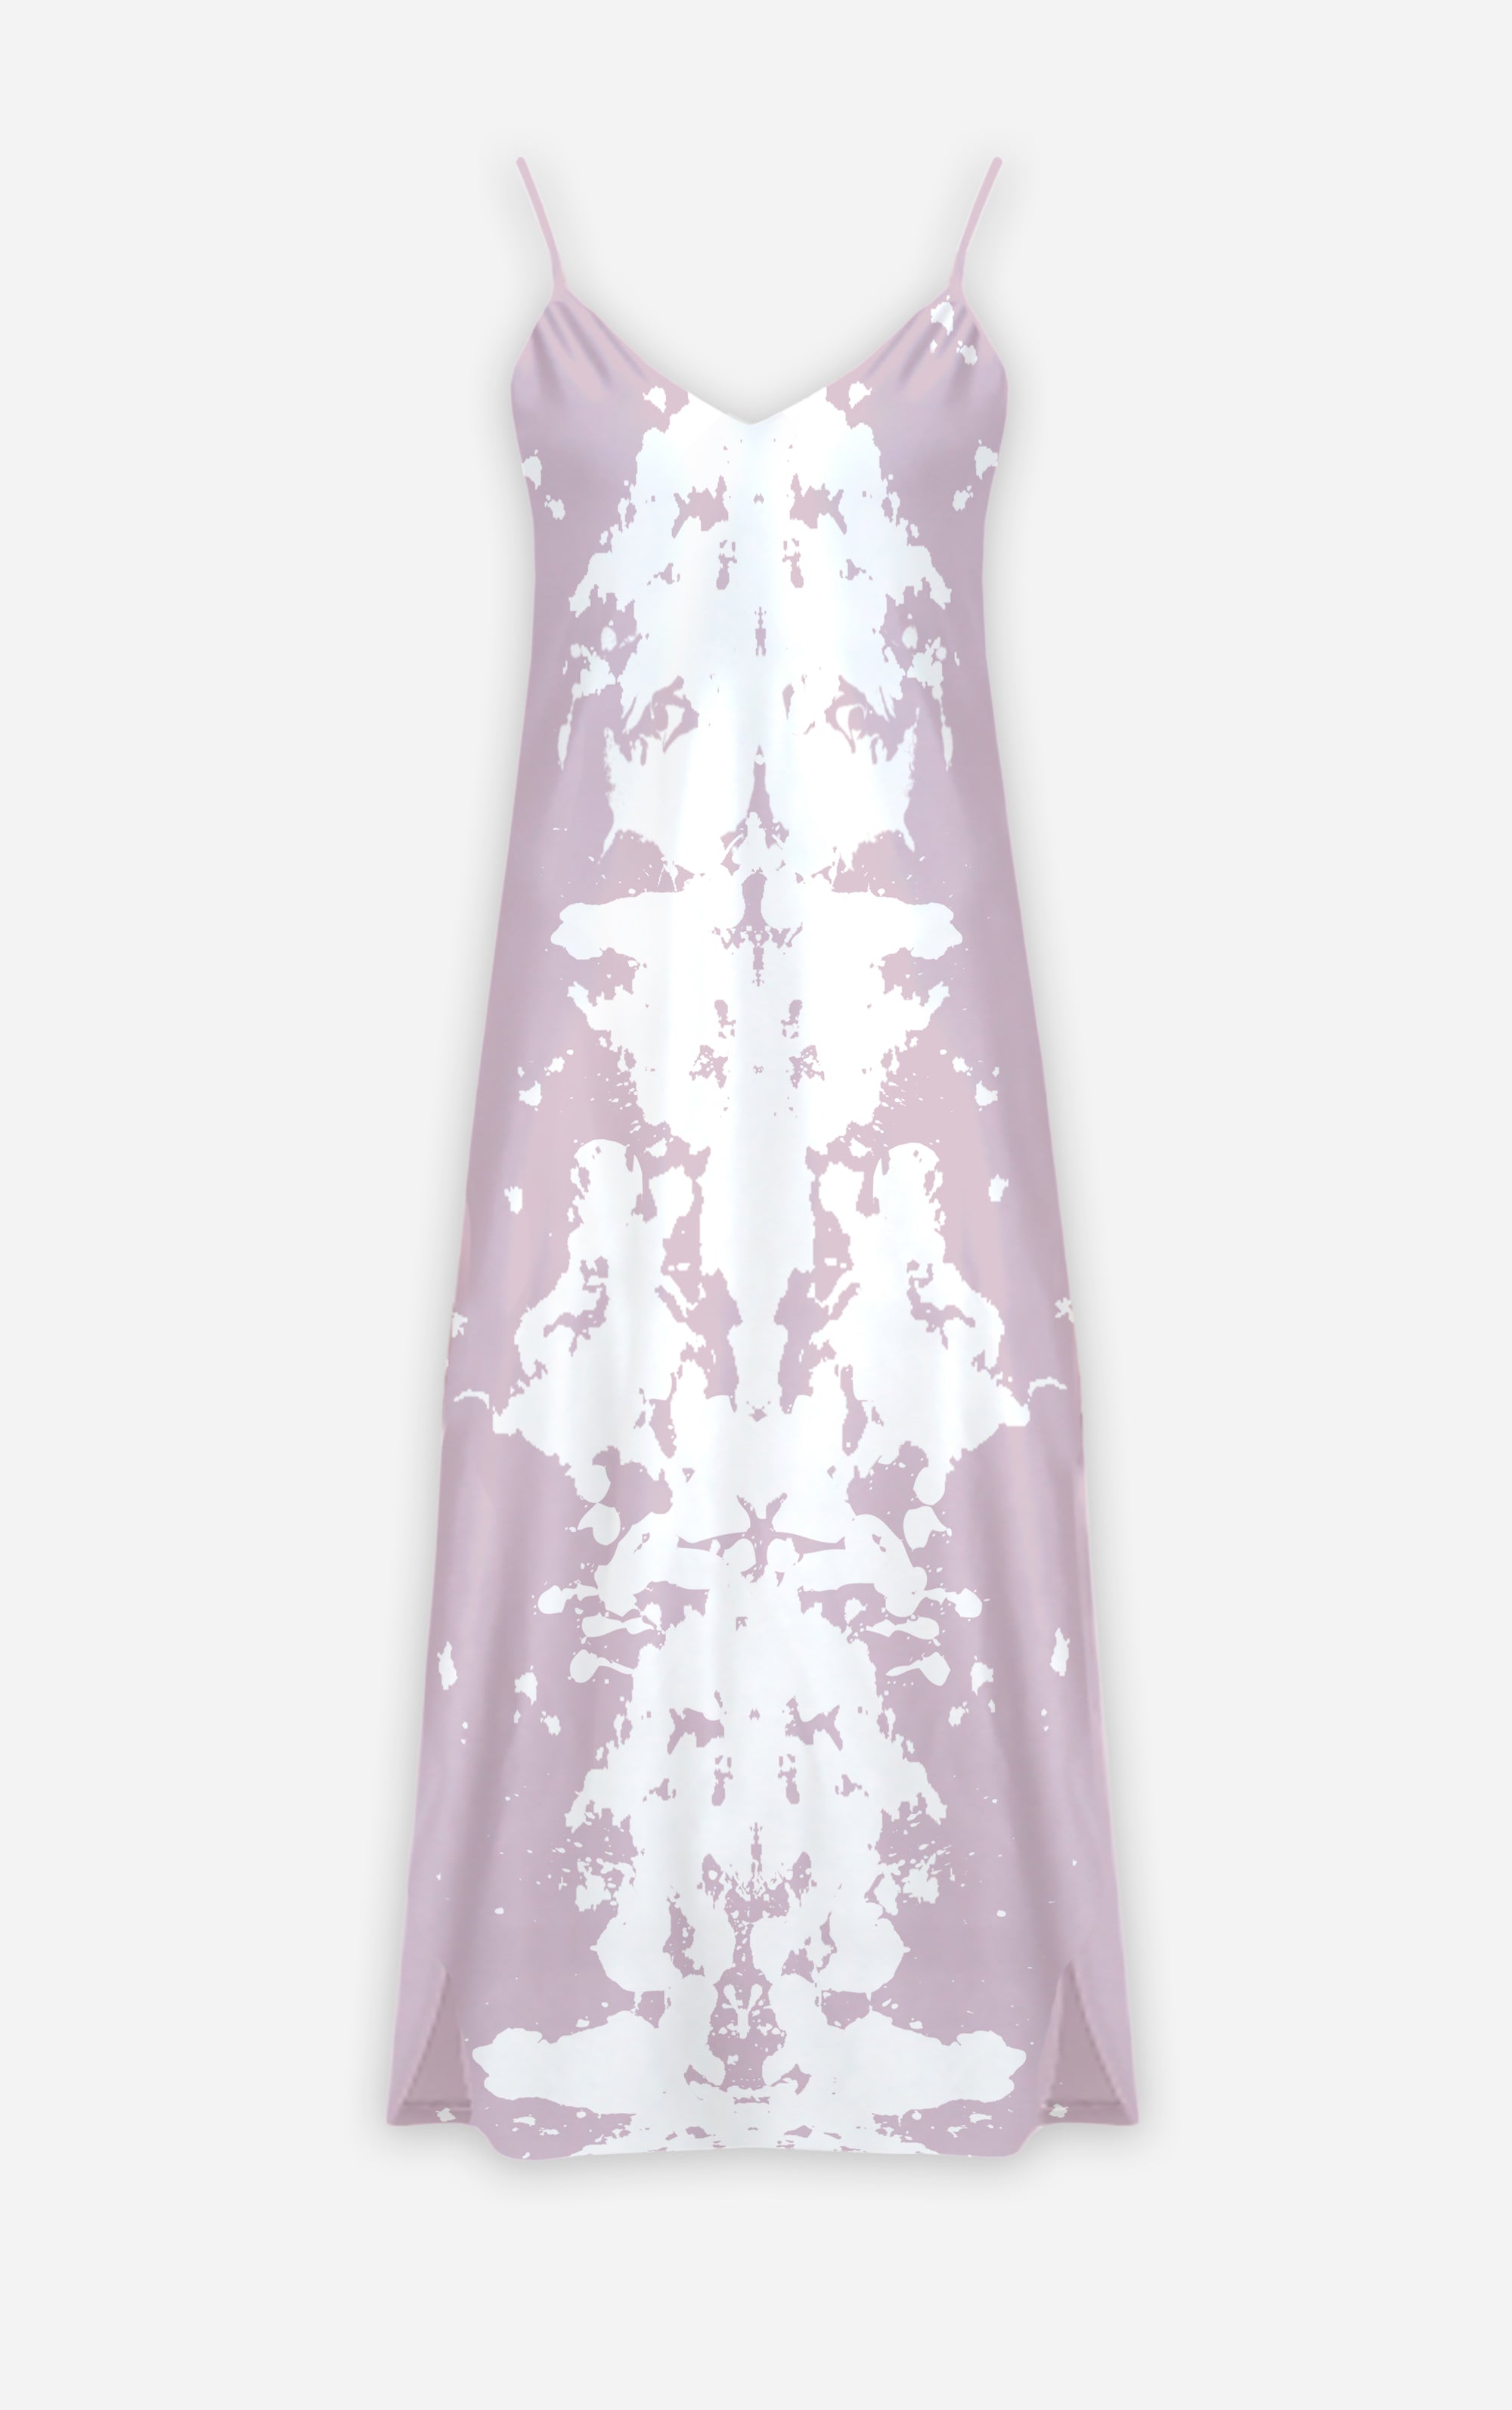 Ink Blot V Neck Slip Dress-Color Blush Purple Lavender & White-Surreal Fashion-Le Leanian-The Photographist